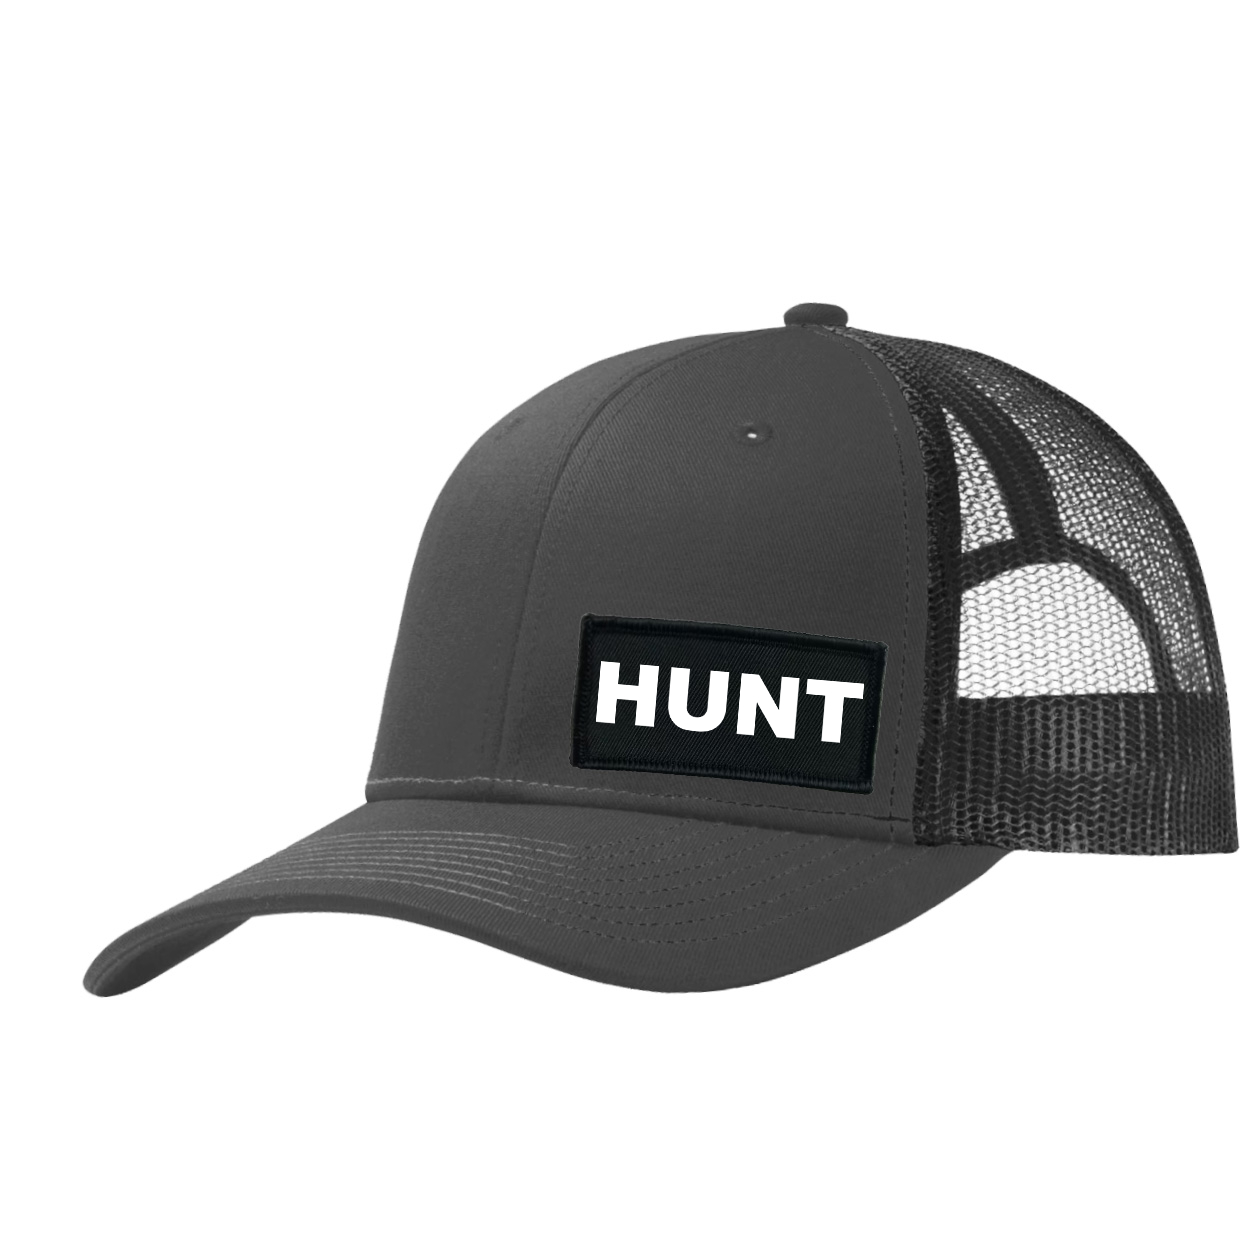 Hunt Brand Logo Night Out Woven Patch Snapback Trucker Hat Dark Gray/Black (White Logo)